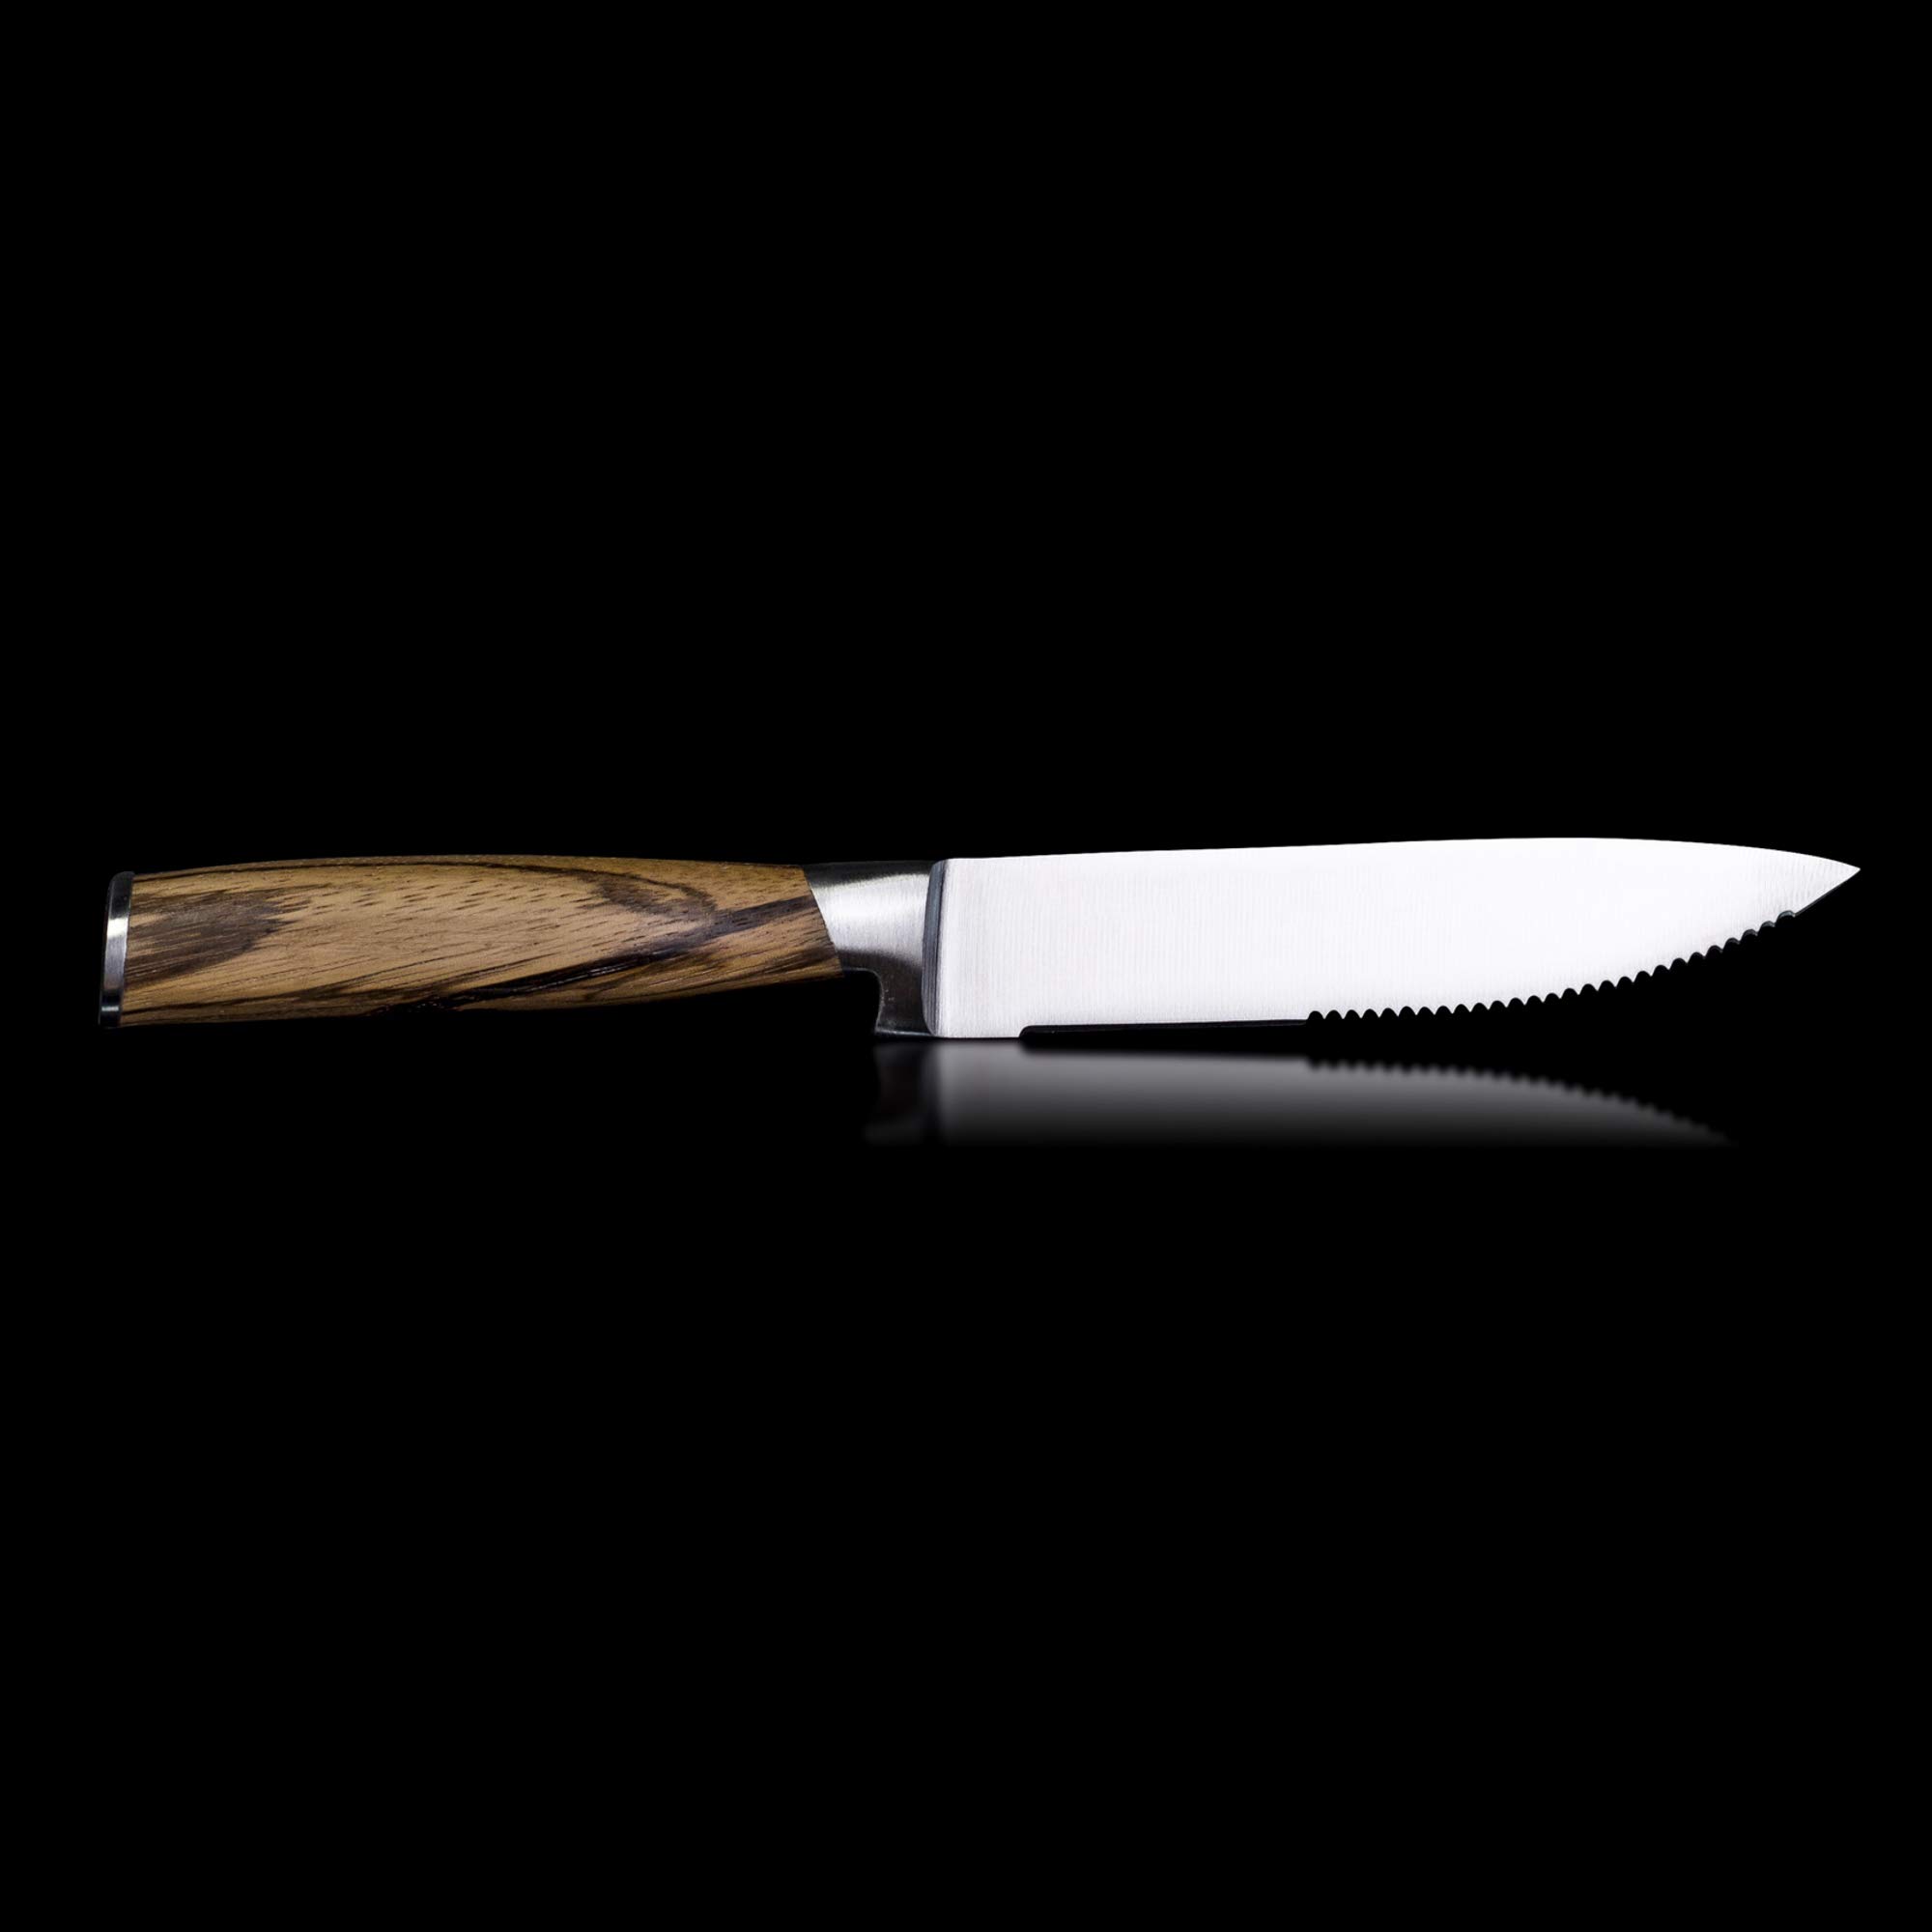 Schmidt Brothers - Zebra Wood 4-Piece Jumbo Steak Knife Set, High-Carbon German Stainless Steel Cutlery in a Wood Gift Box